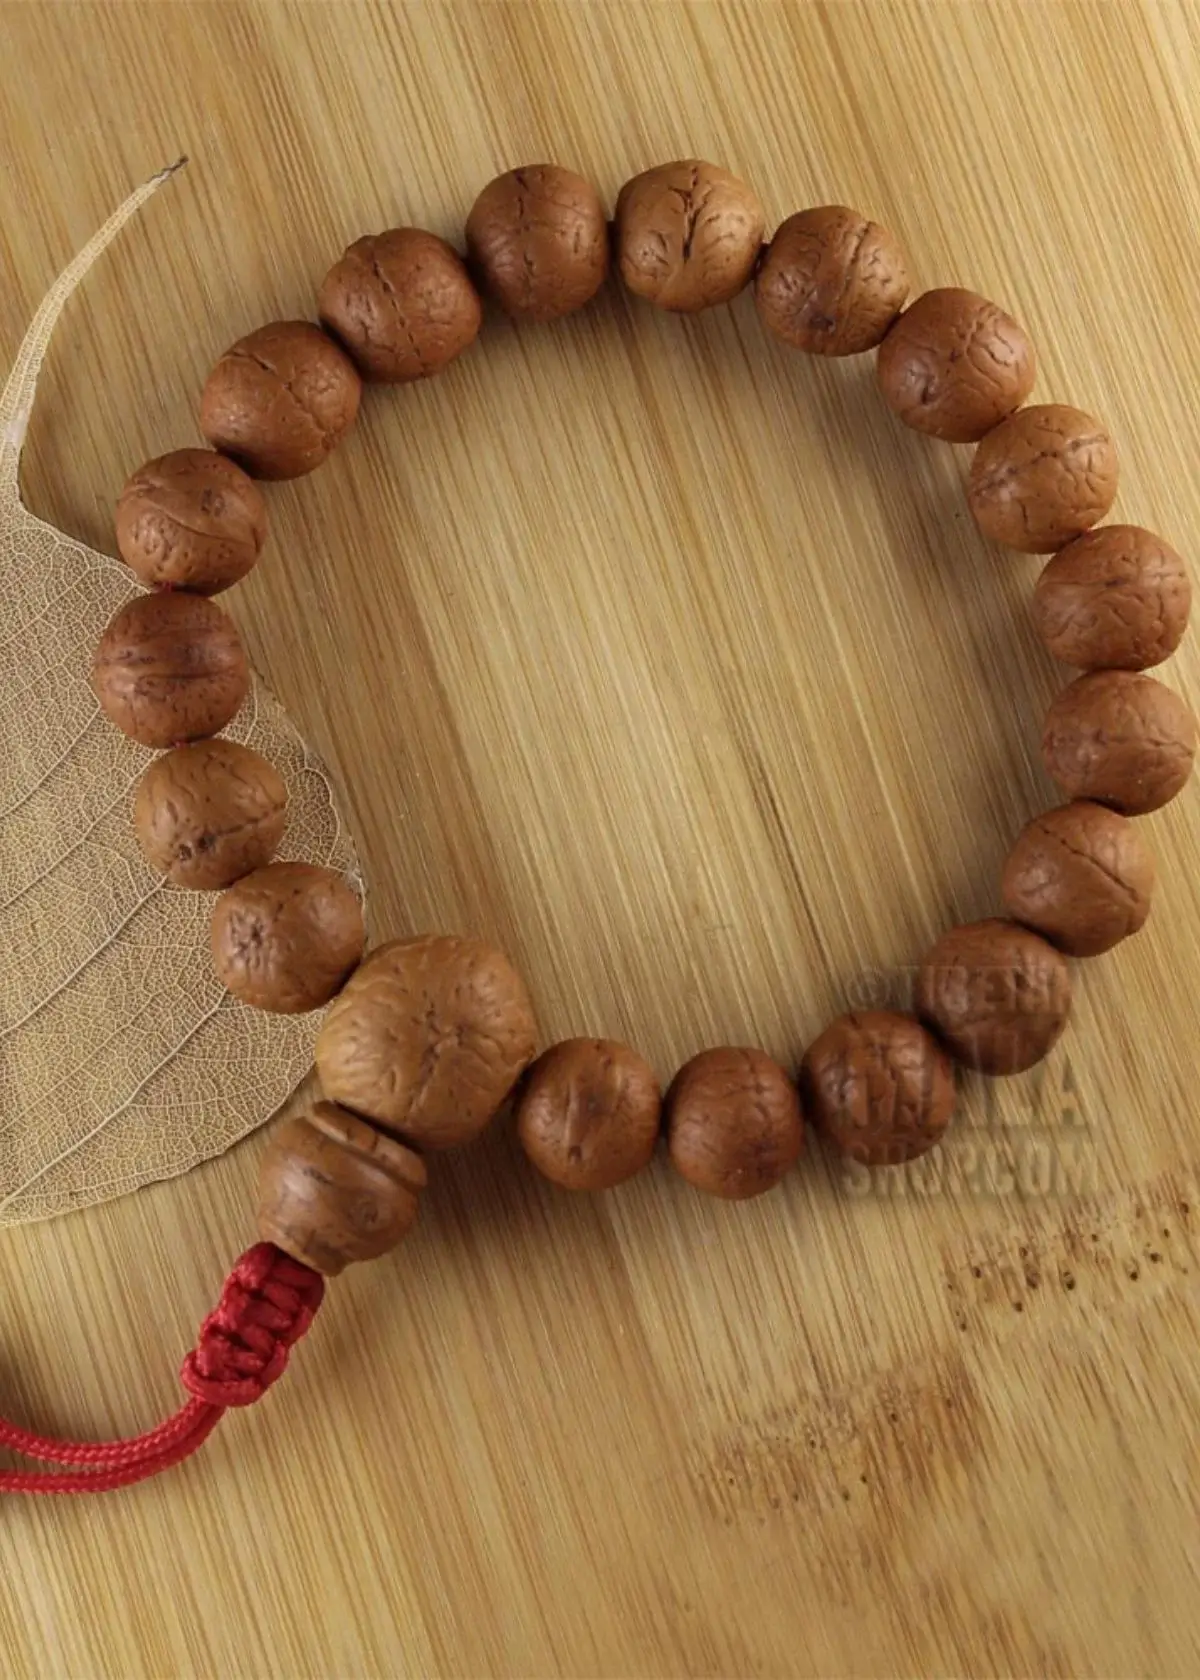 What does a mandala bracelet symbolize?